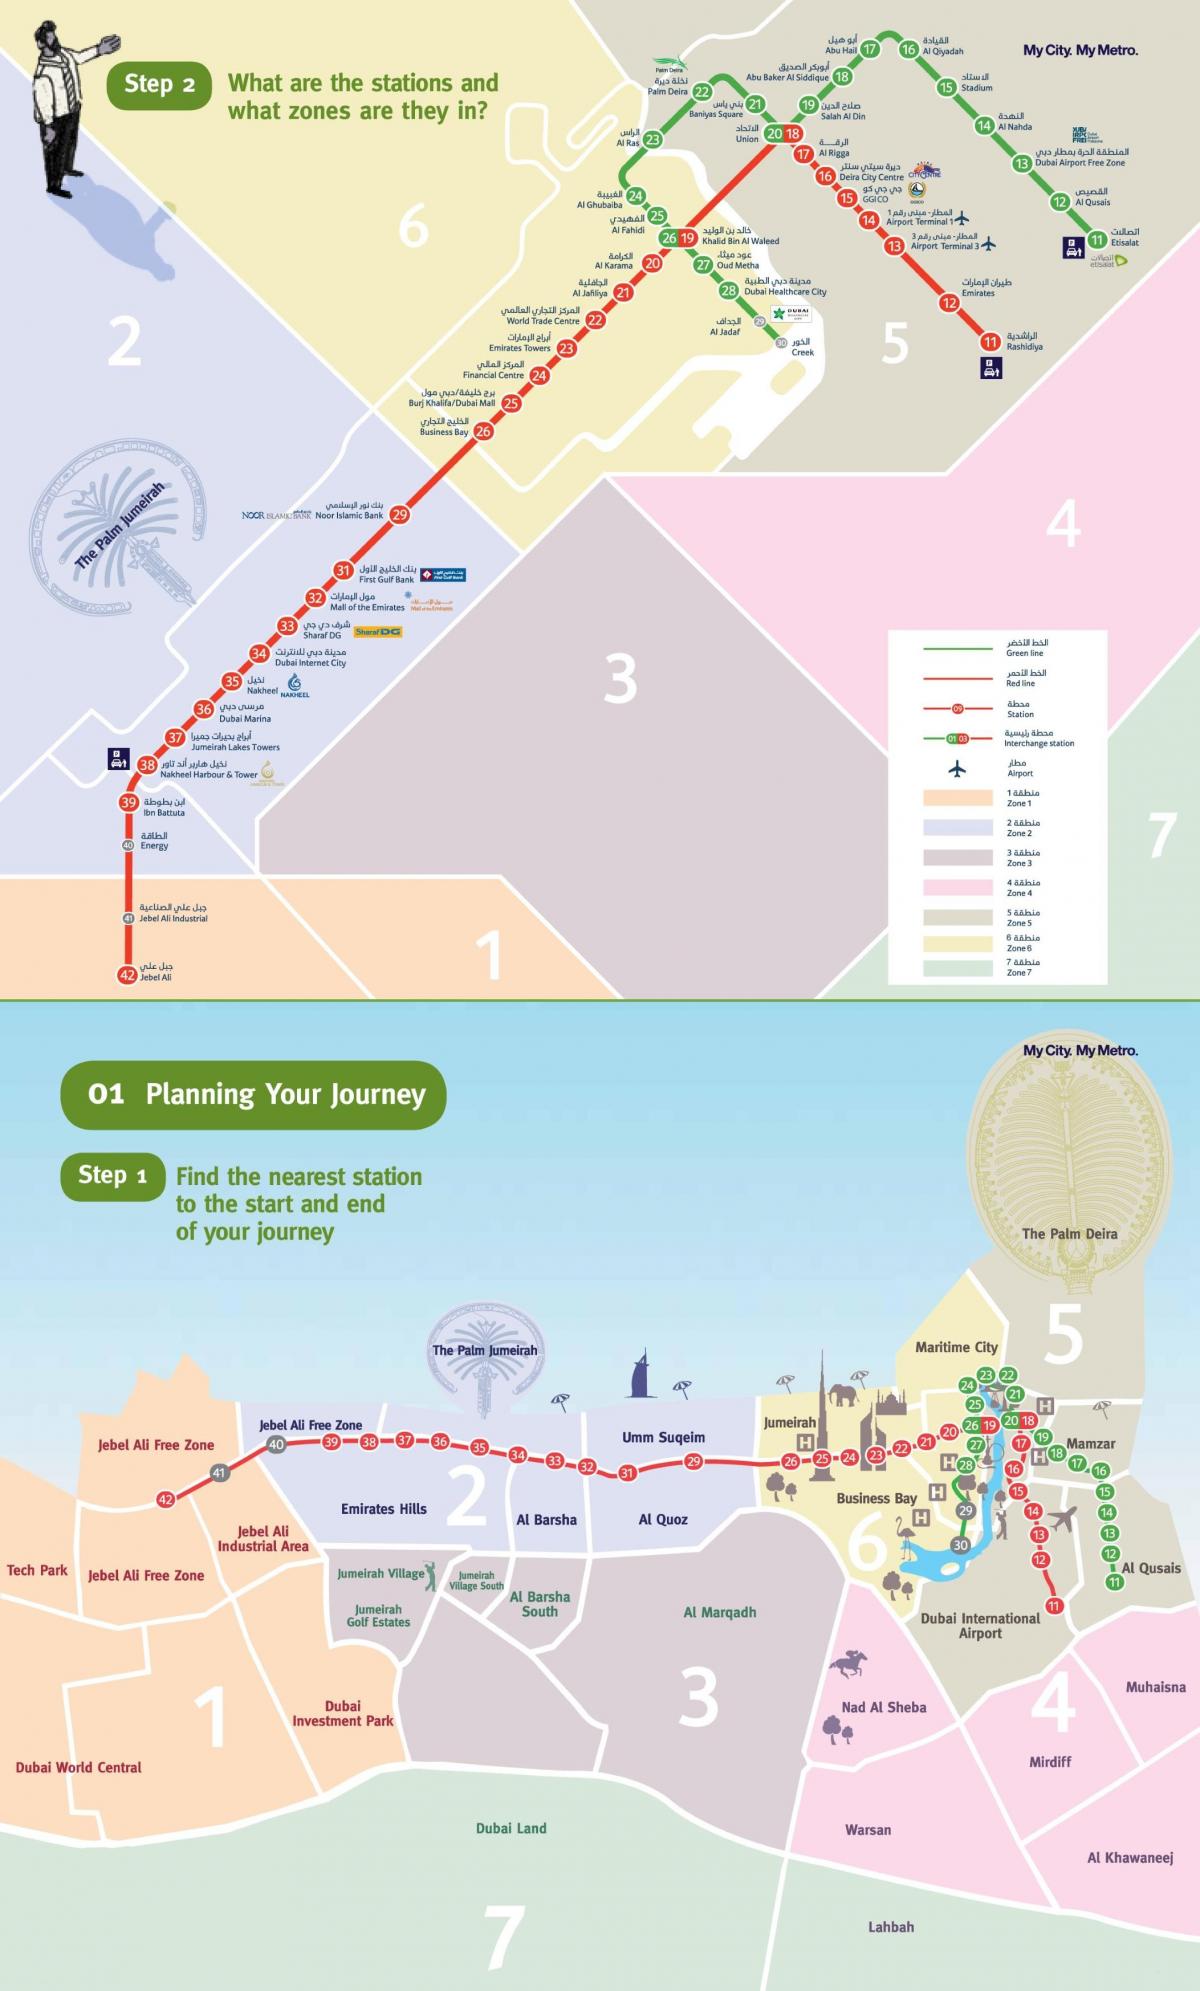 метро станица и Дубаи мапа